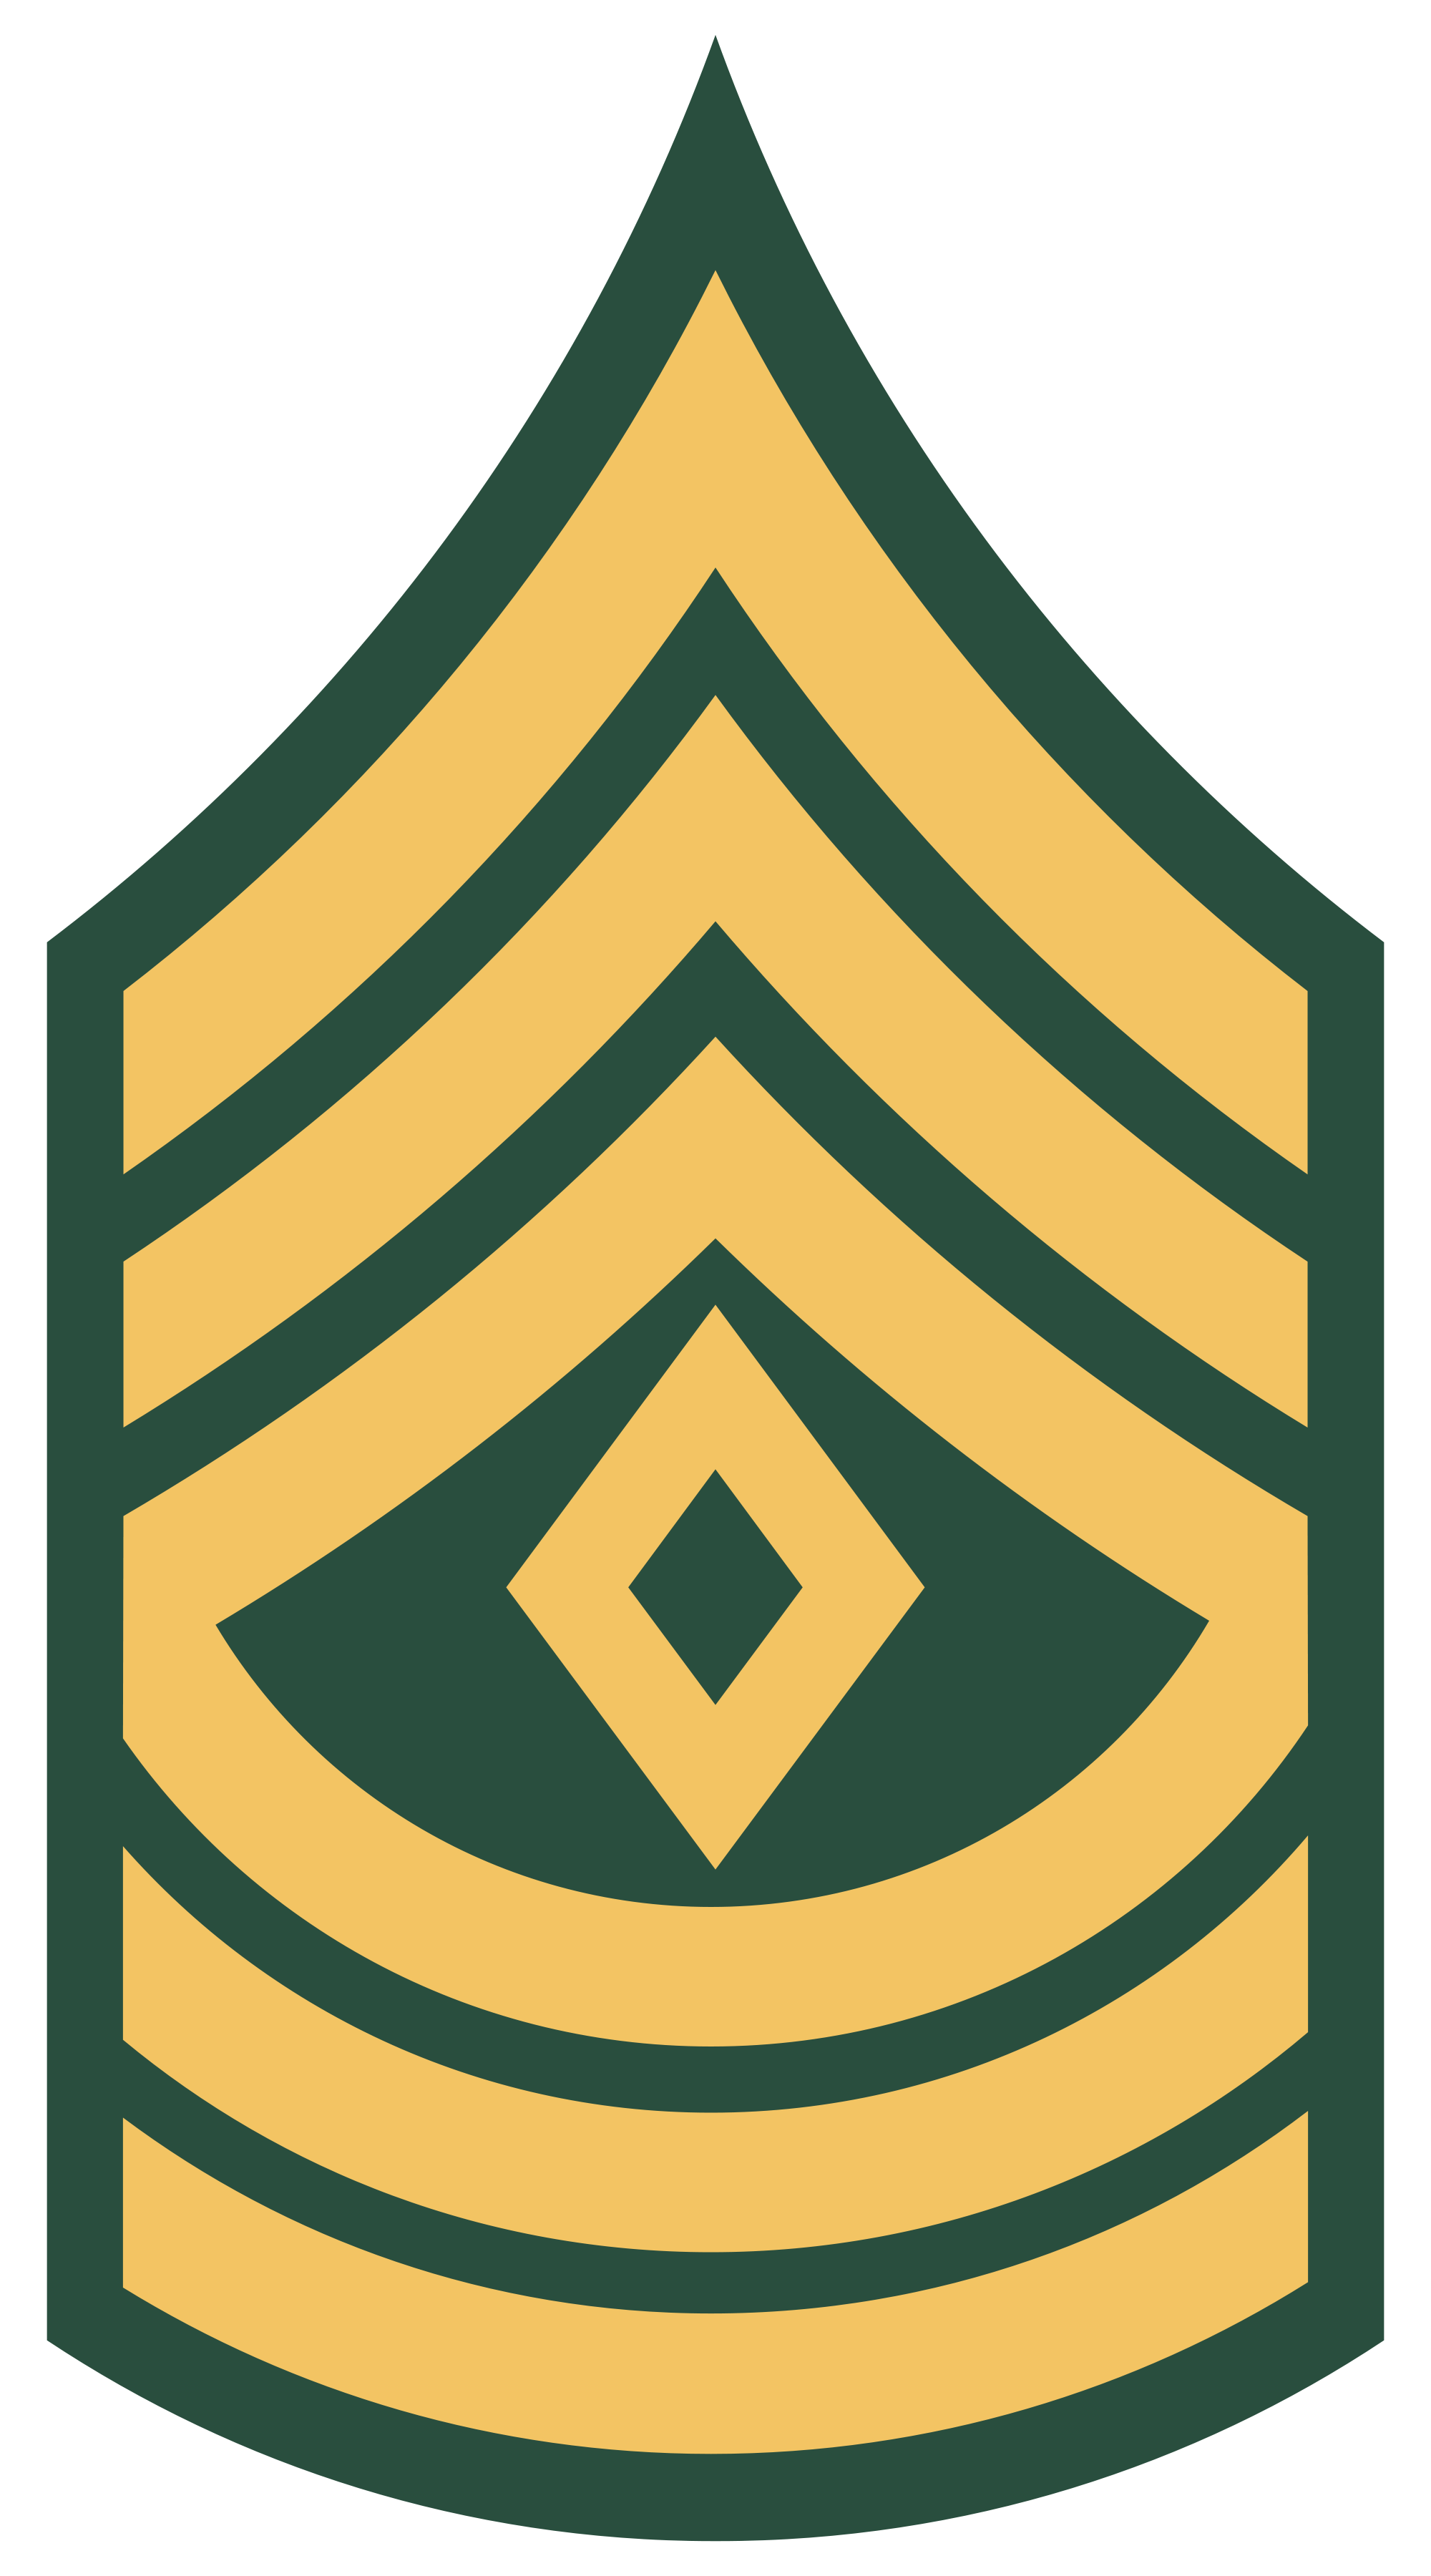 Army logo clip art